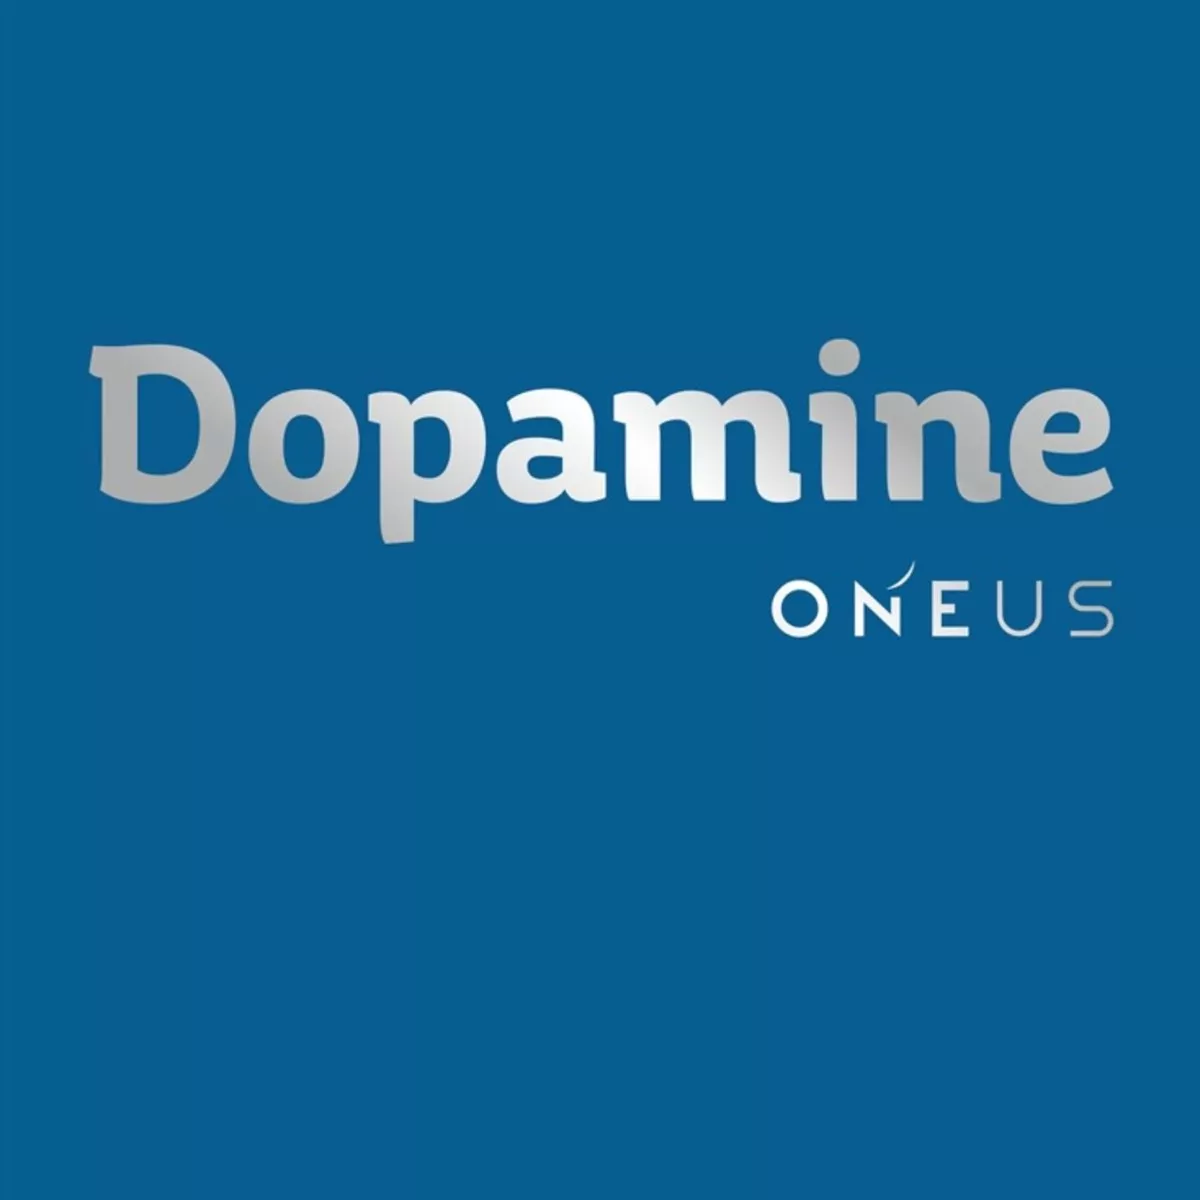 Dopamine - Wikipedia